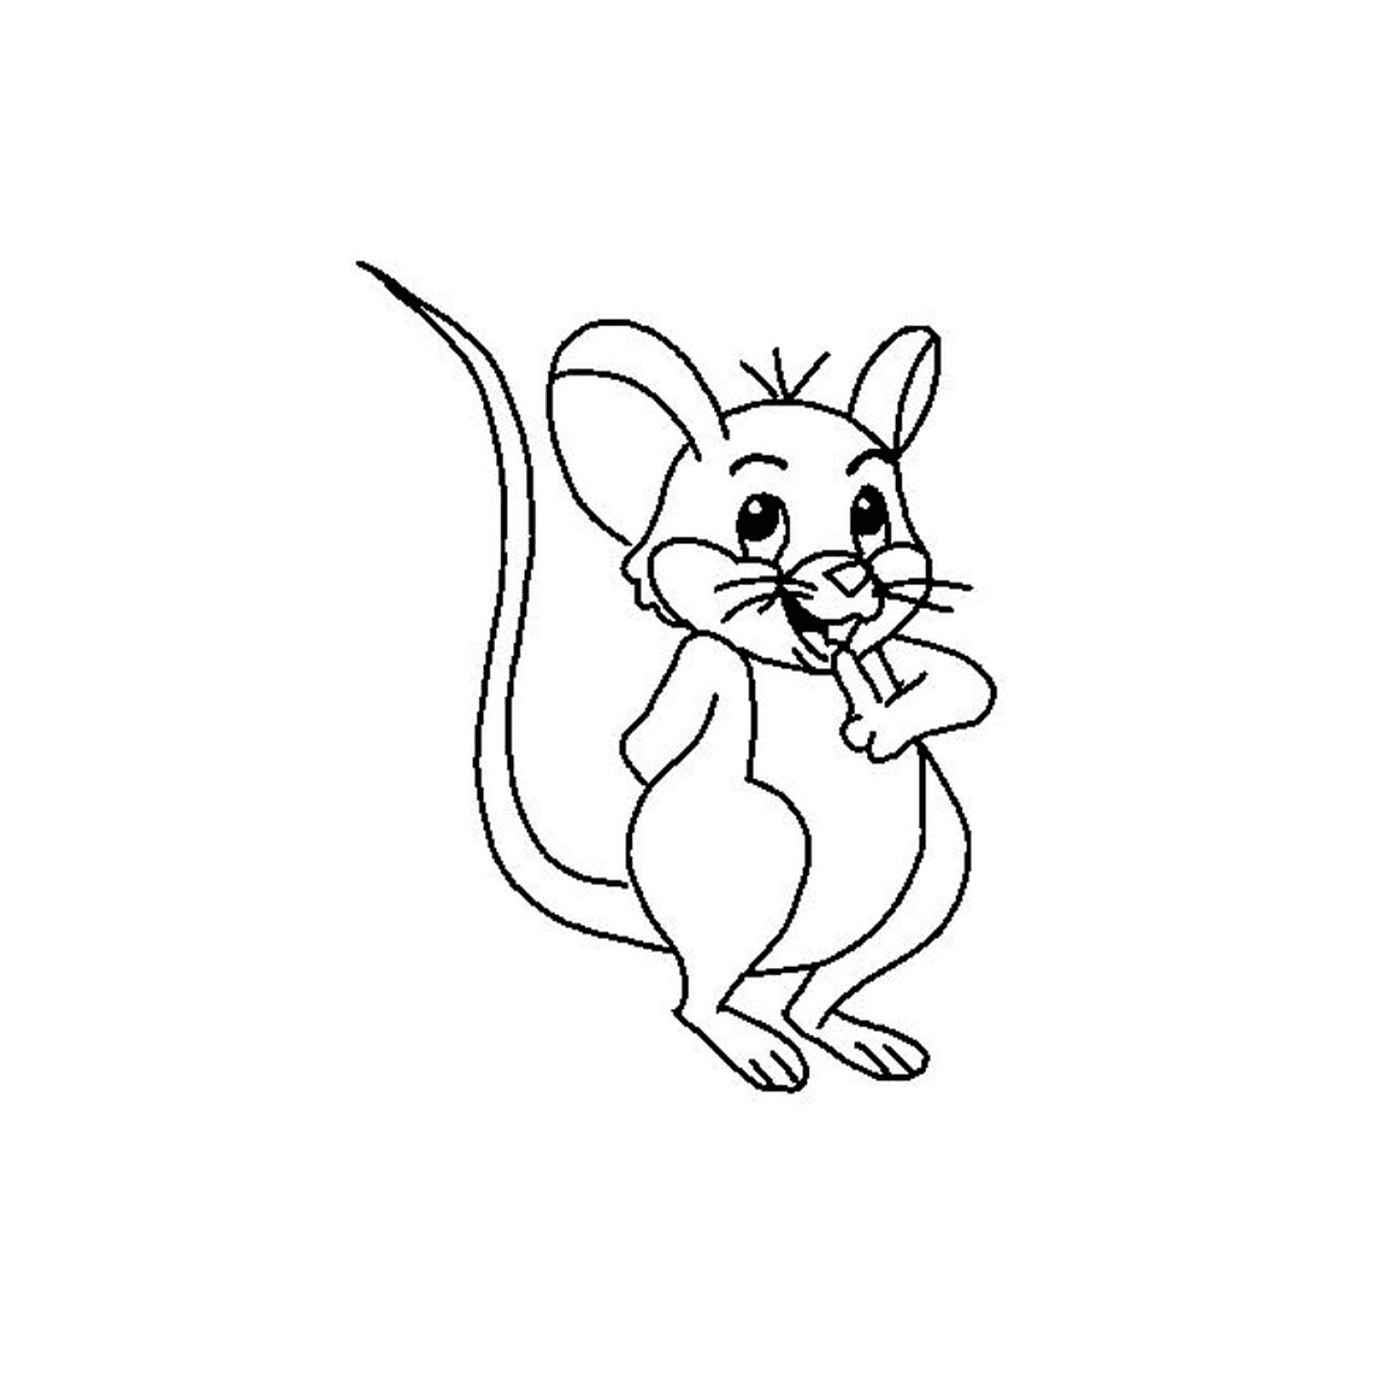  A maternal mouse 